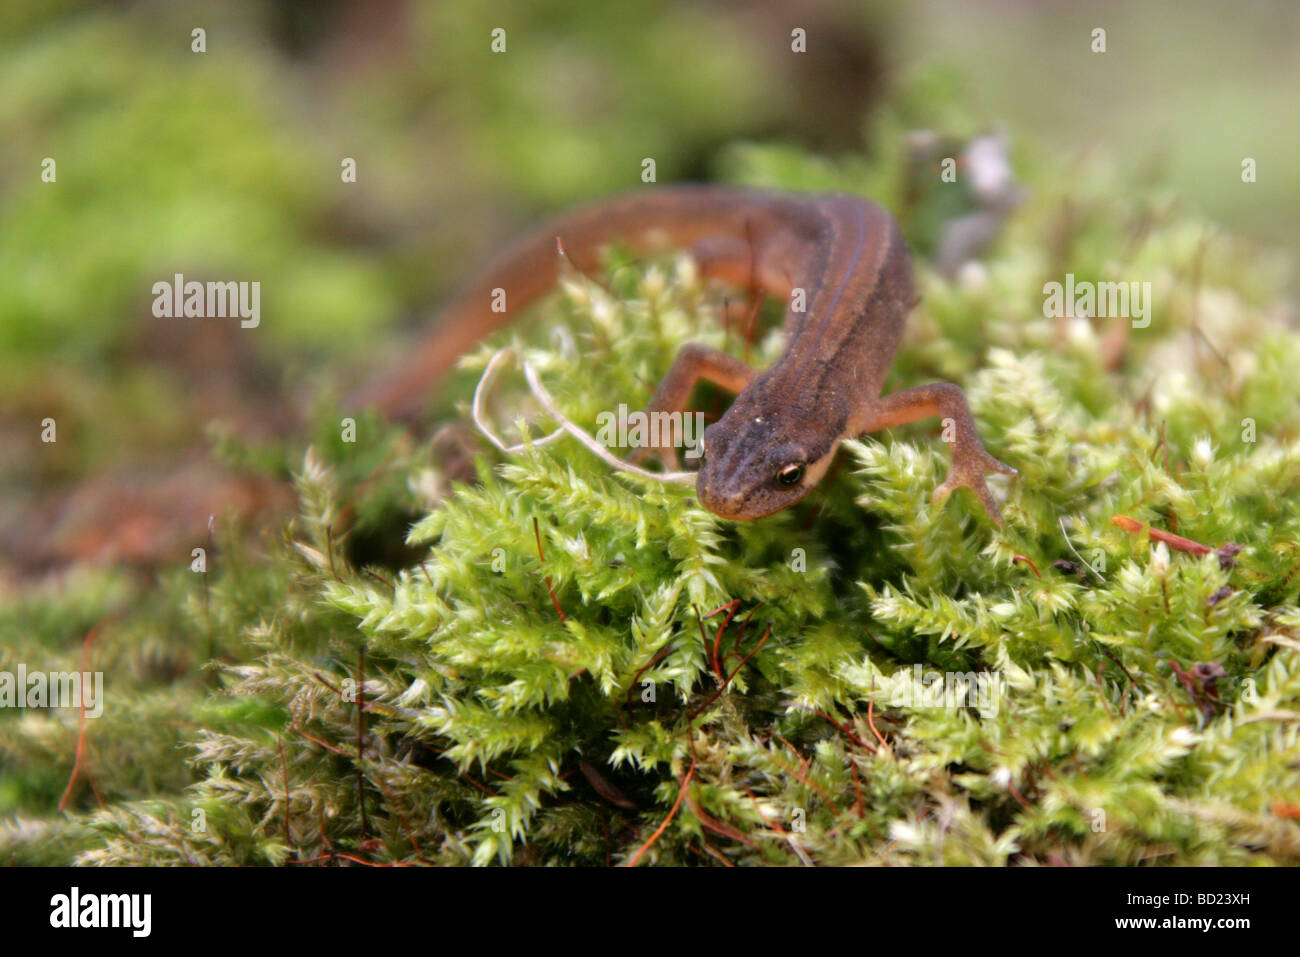 Newt liscia o tritone comune, Lissotriton vulgaris precedentemente Triturus vulgaris vulgaris, Salamandridae. Foto Stock